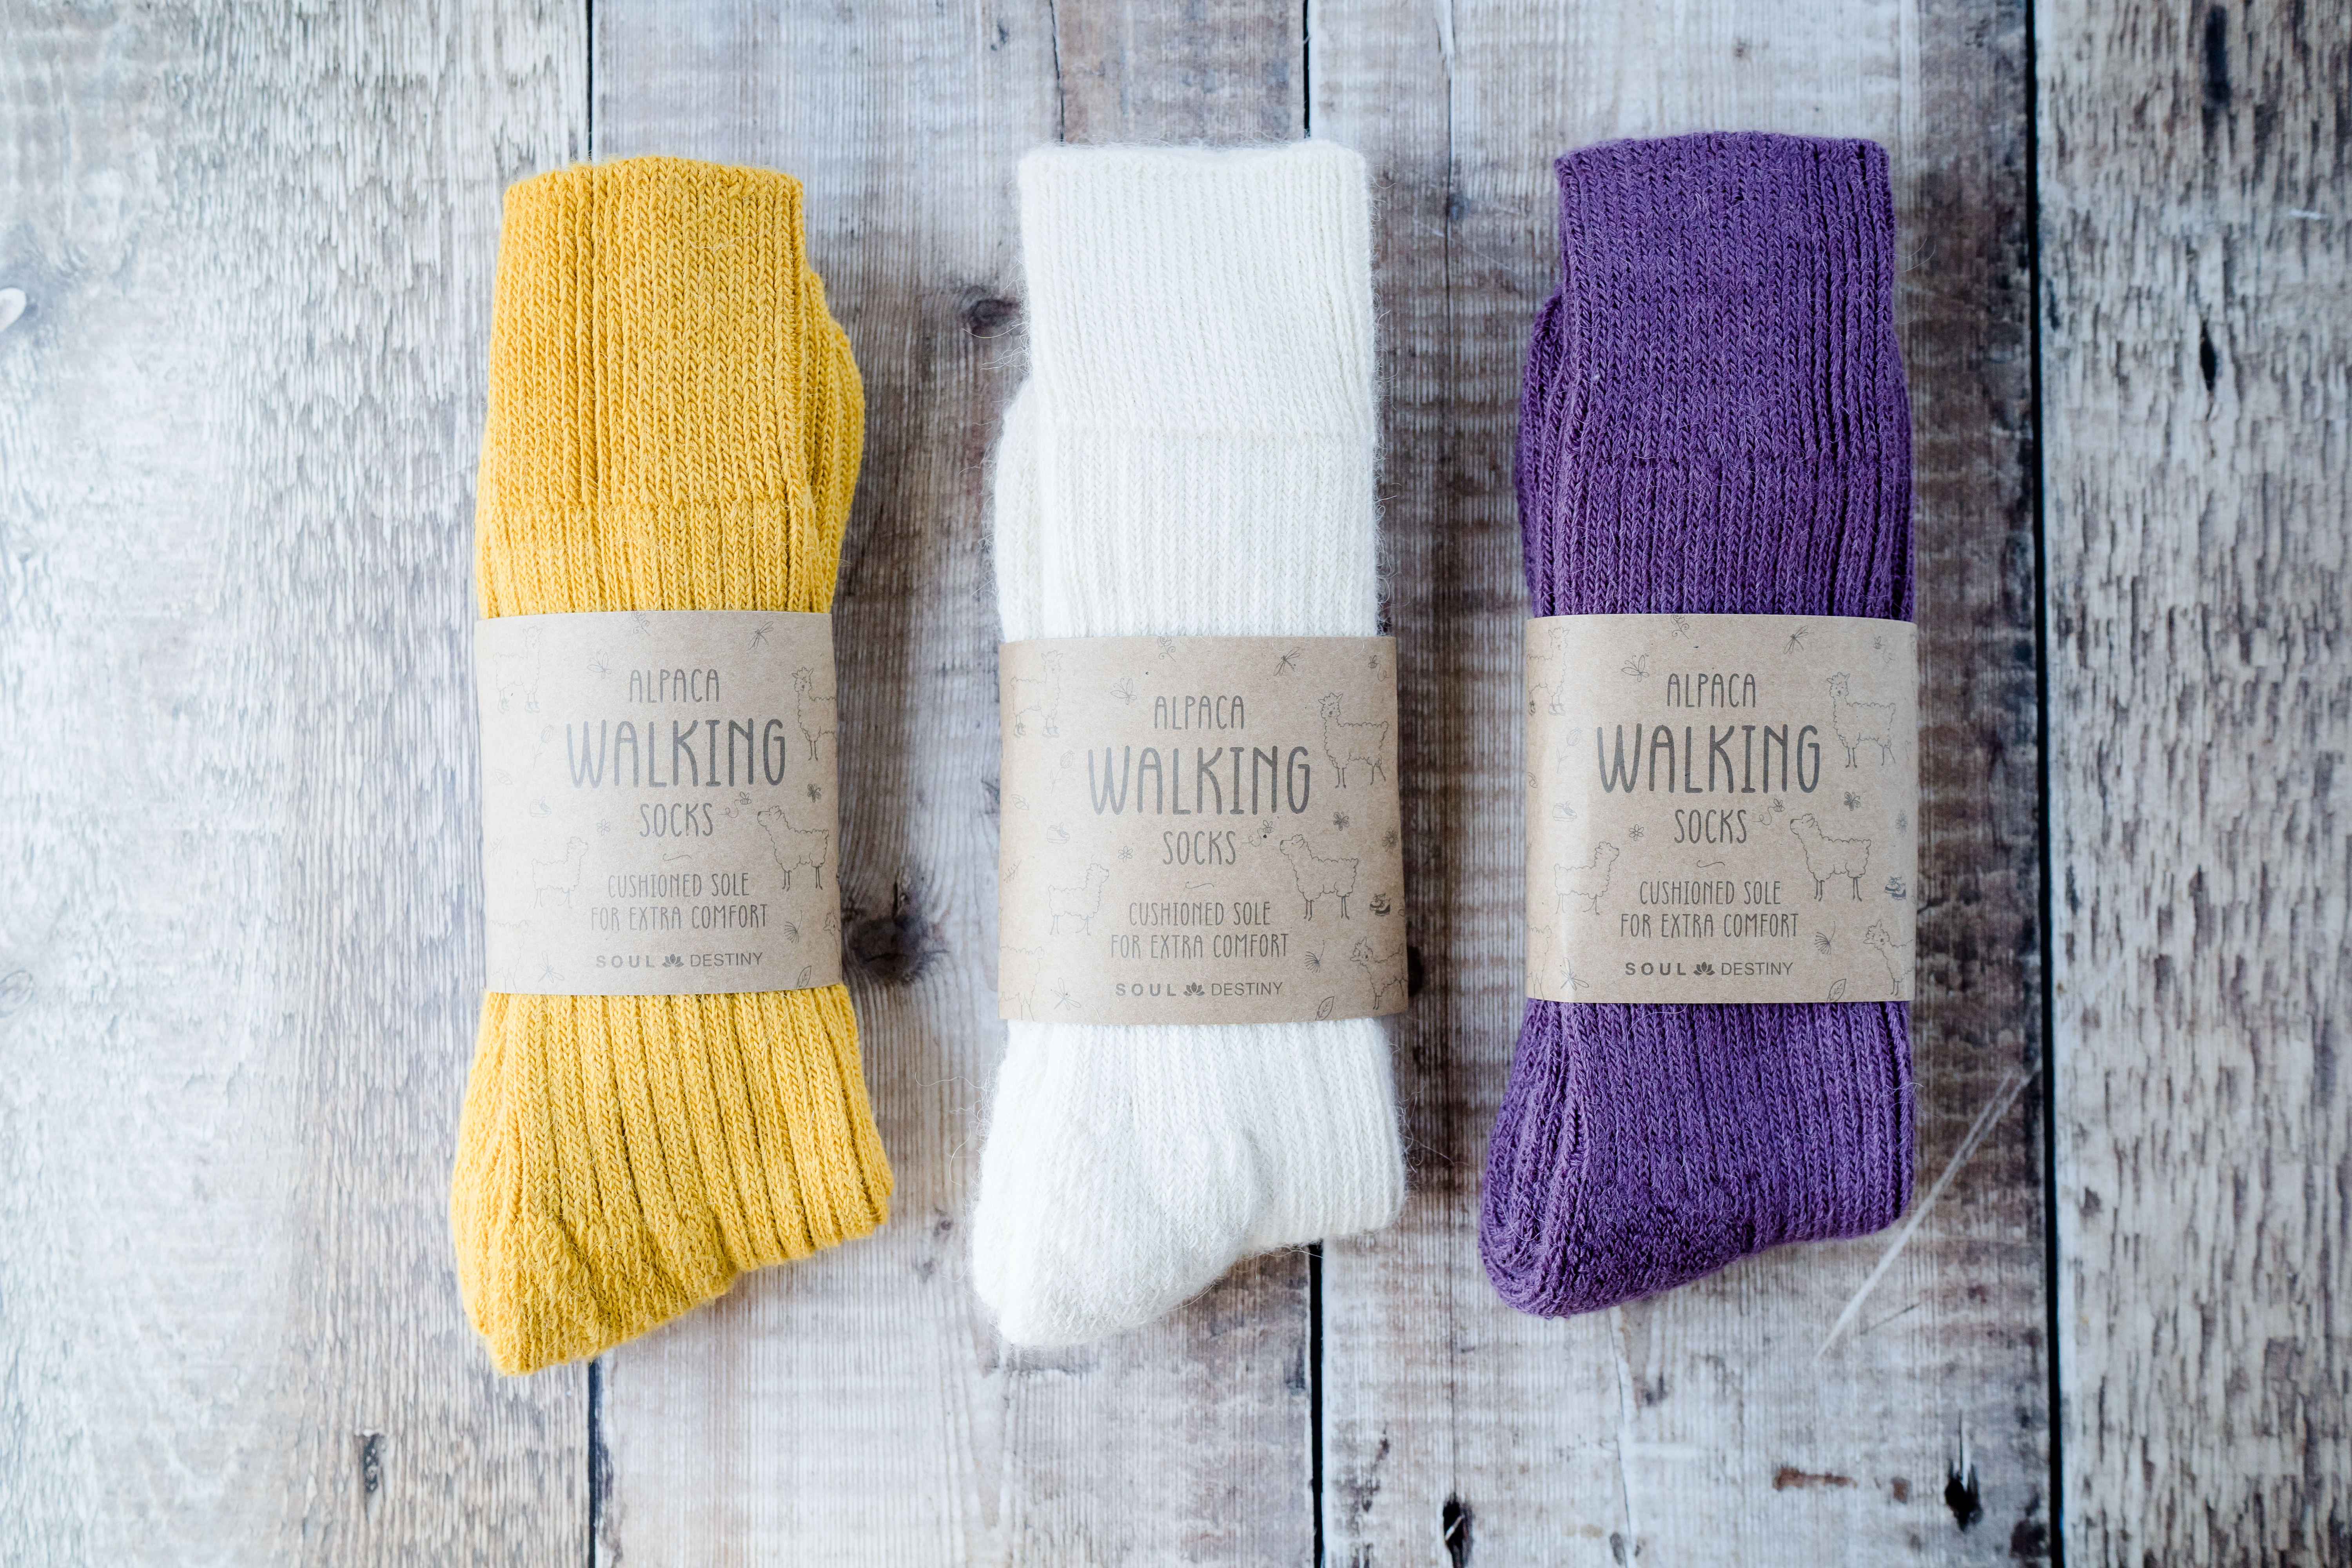 Gift Pack Idea F 3 Pairs of Alpaca Walking Socks, Cushioned Sole, 75% Alpaca Wool